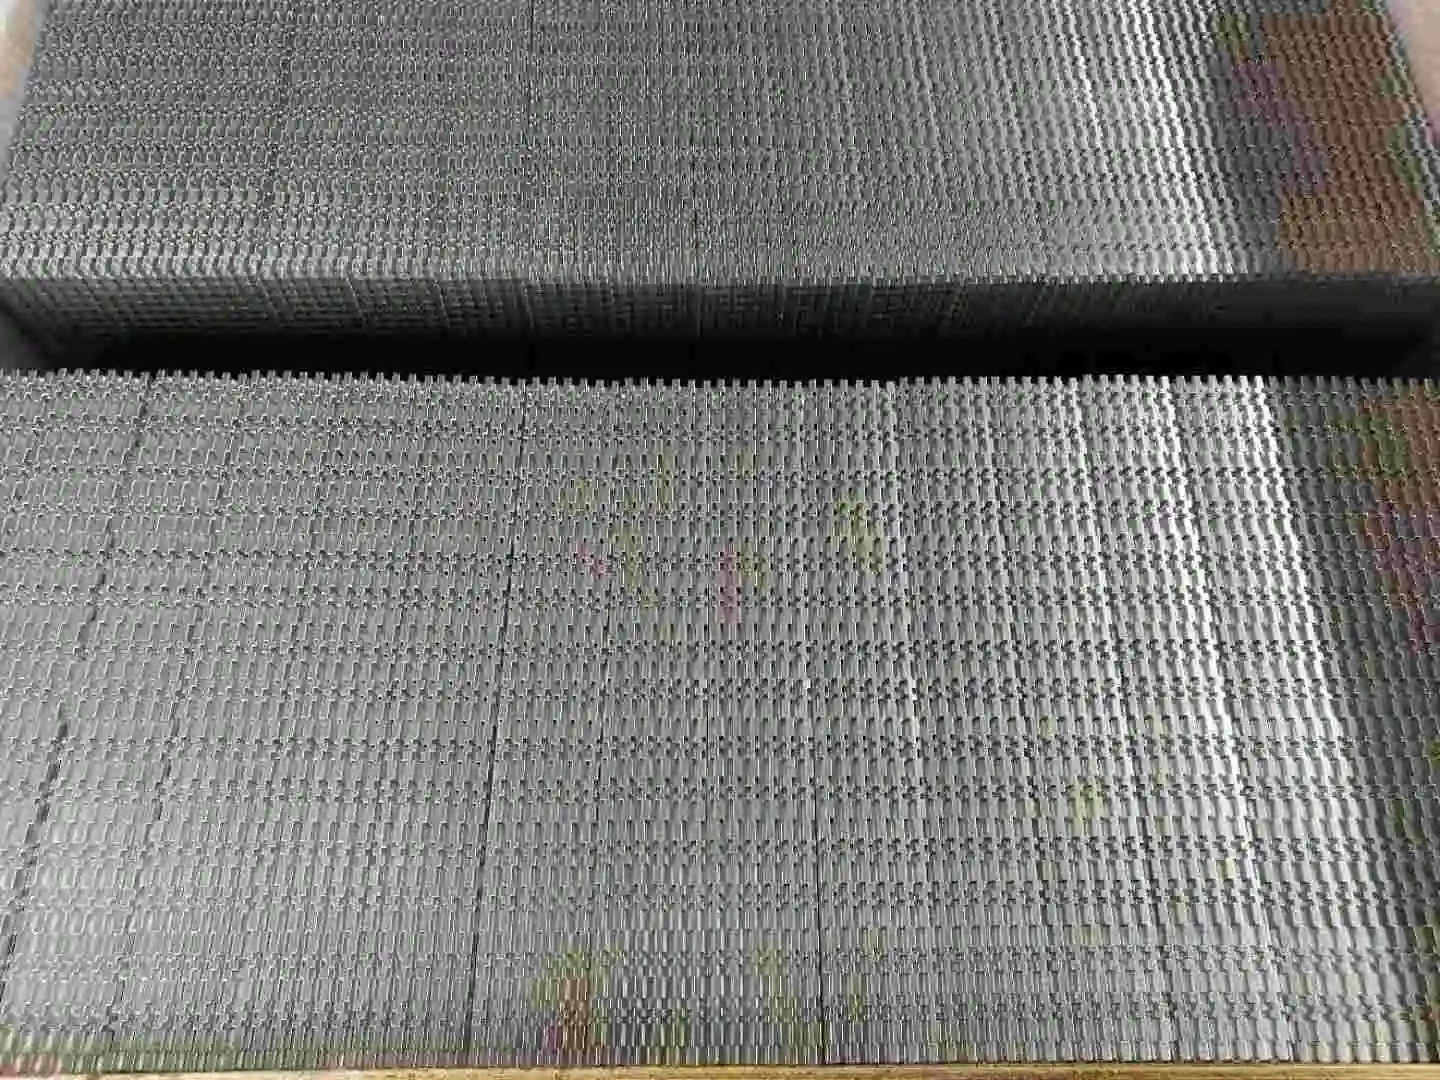 Hliníková vytlačovaná trubka chladiče pro automobily